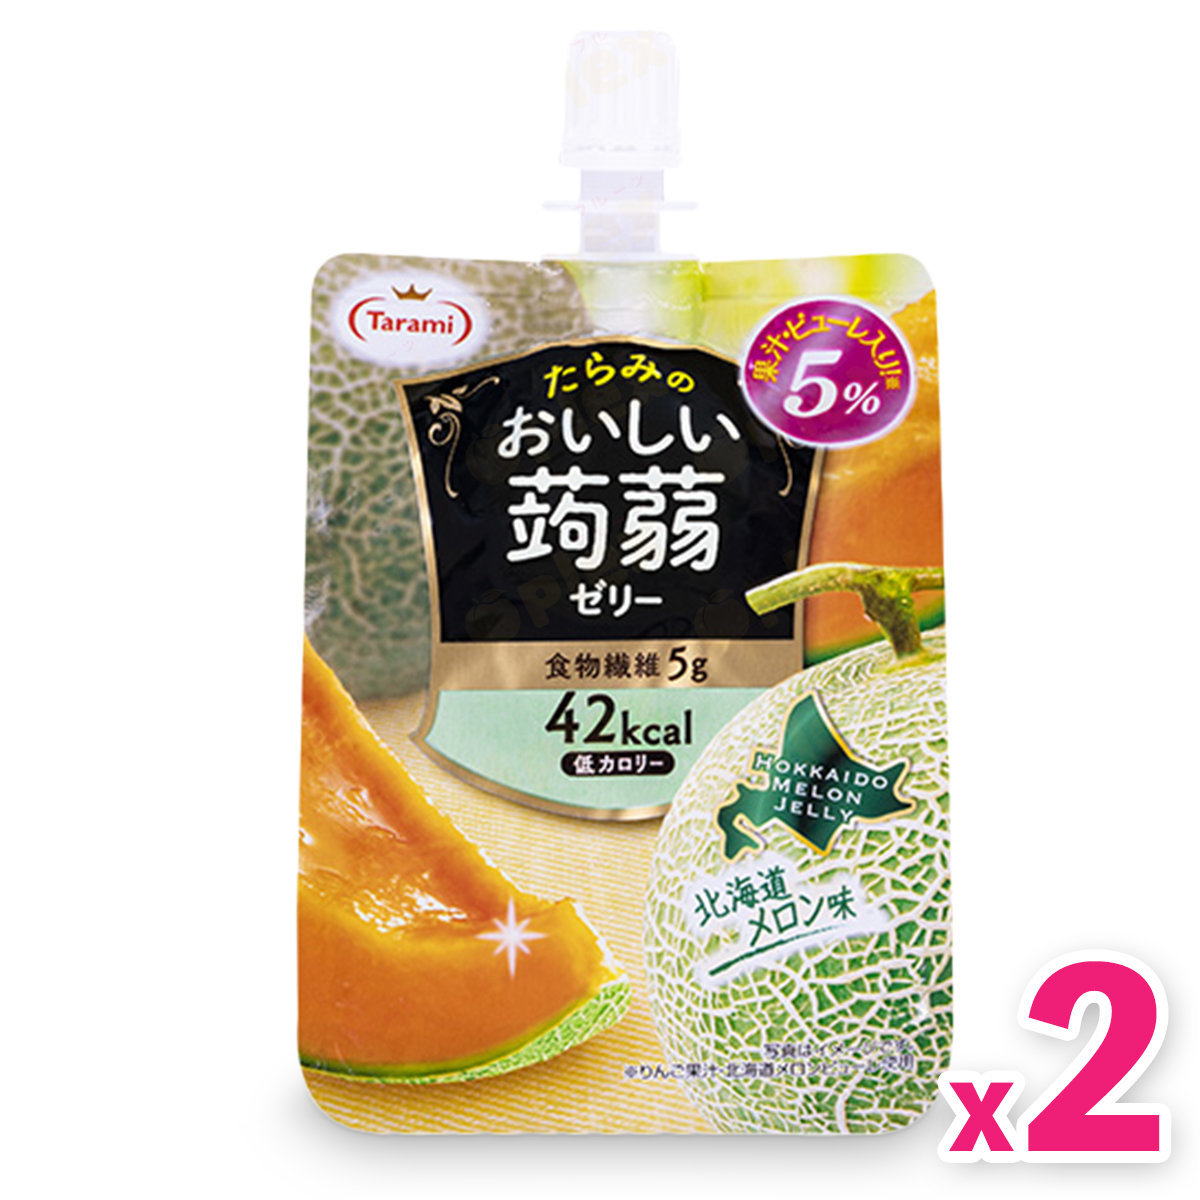 Tarami Konjac Jelly 150g Yubari Melon X 2 Packs Lowcal Hktvmall Online Shopping